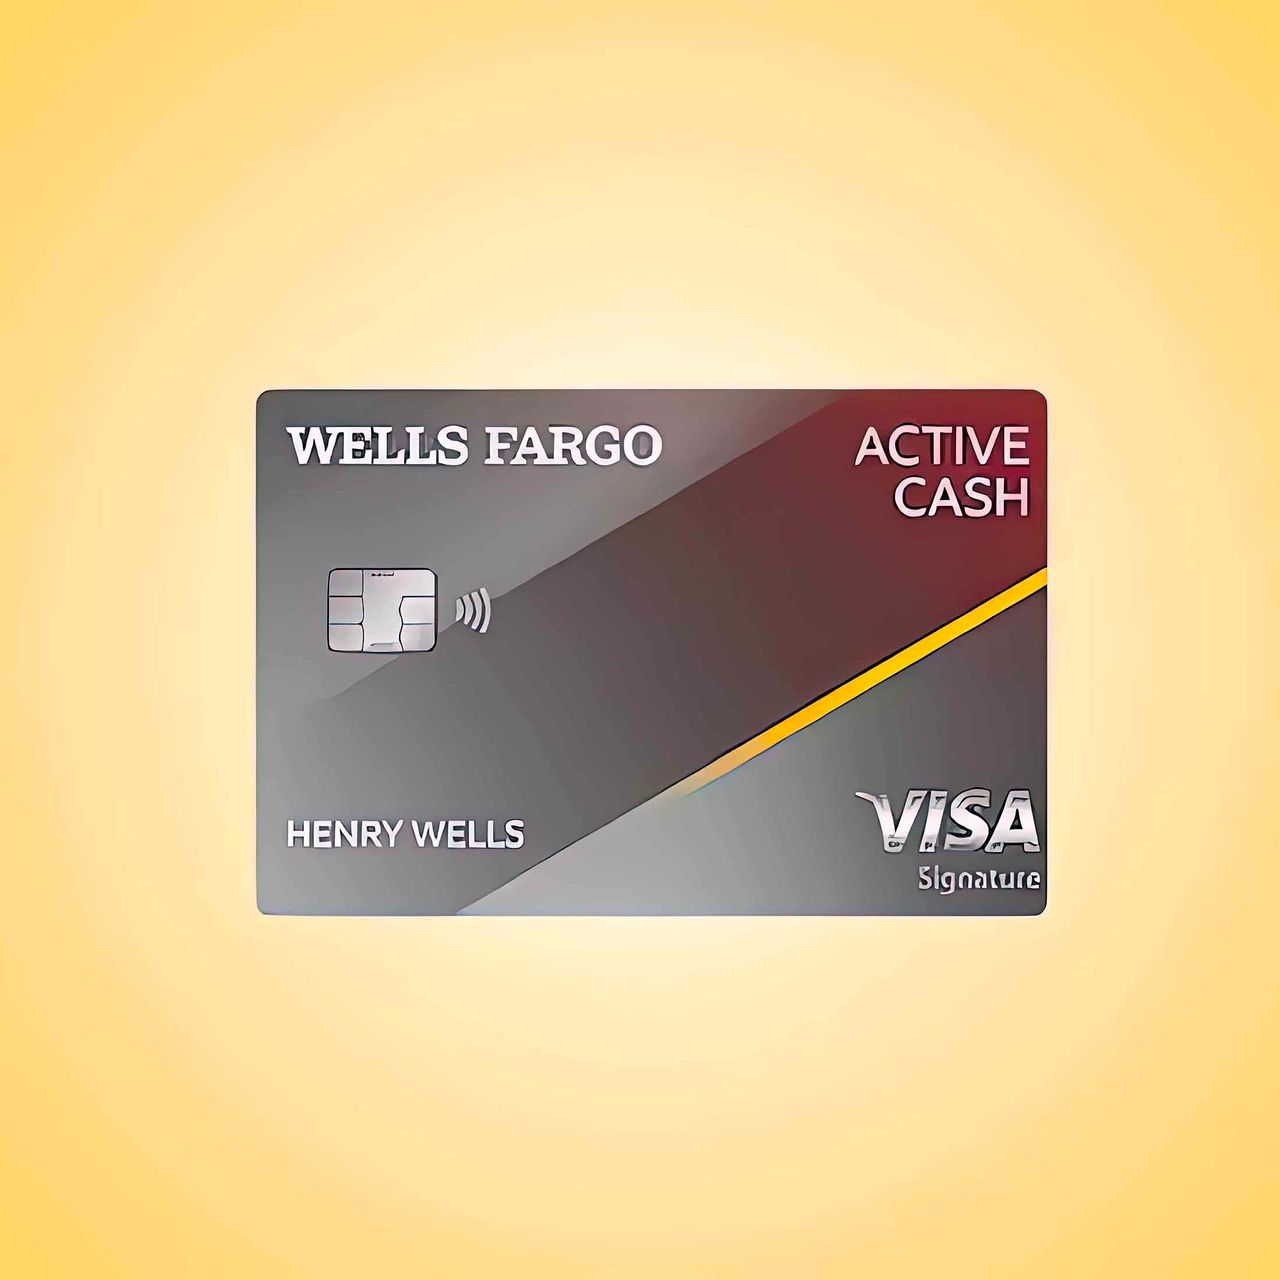 Wells Fargo Active Cash Card full review